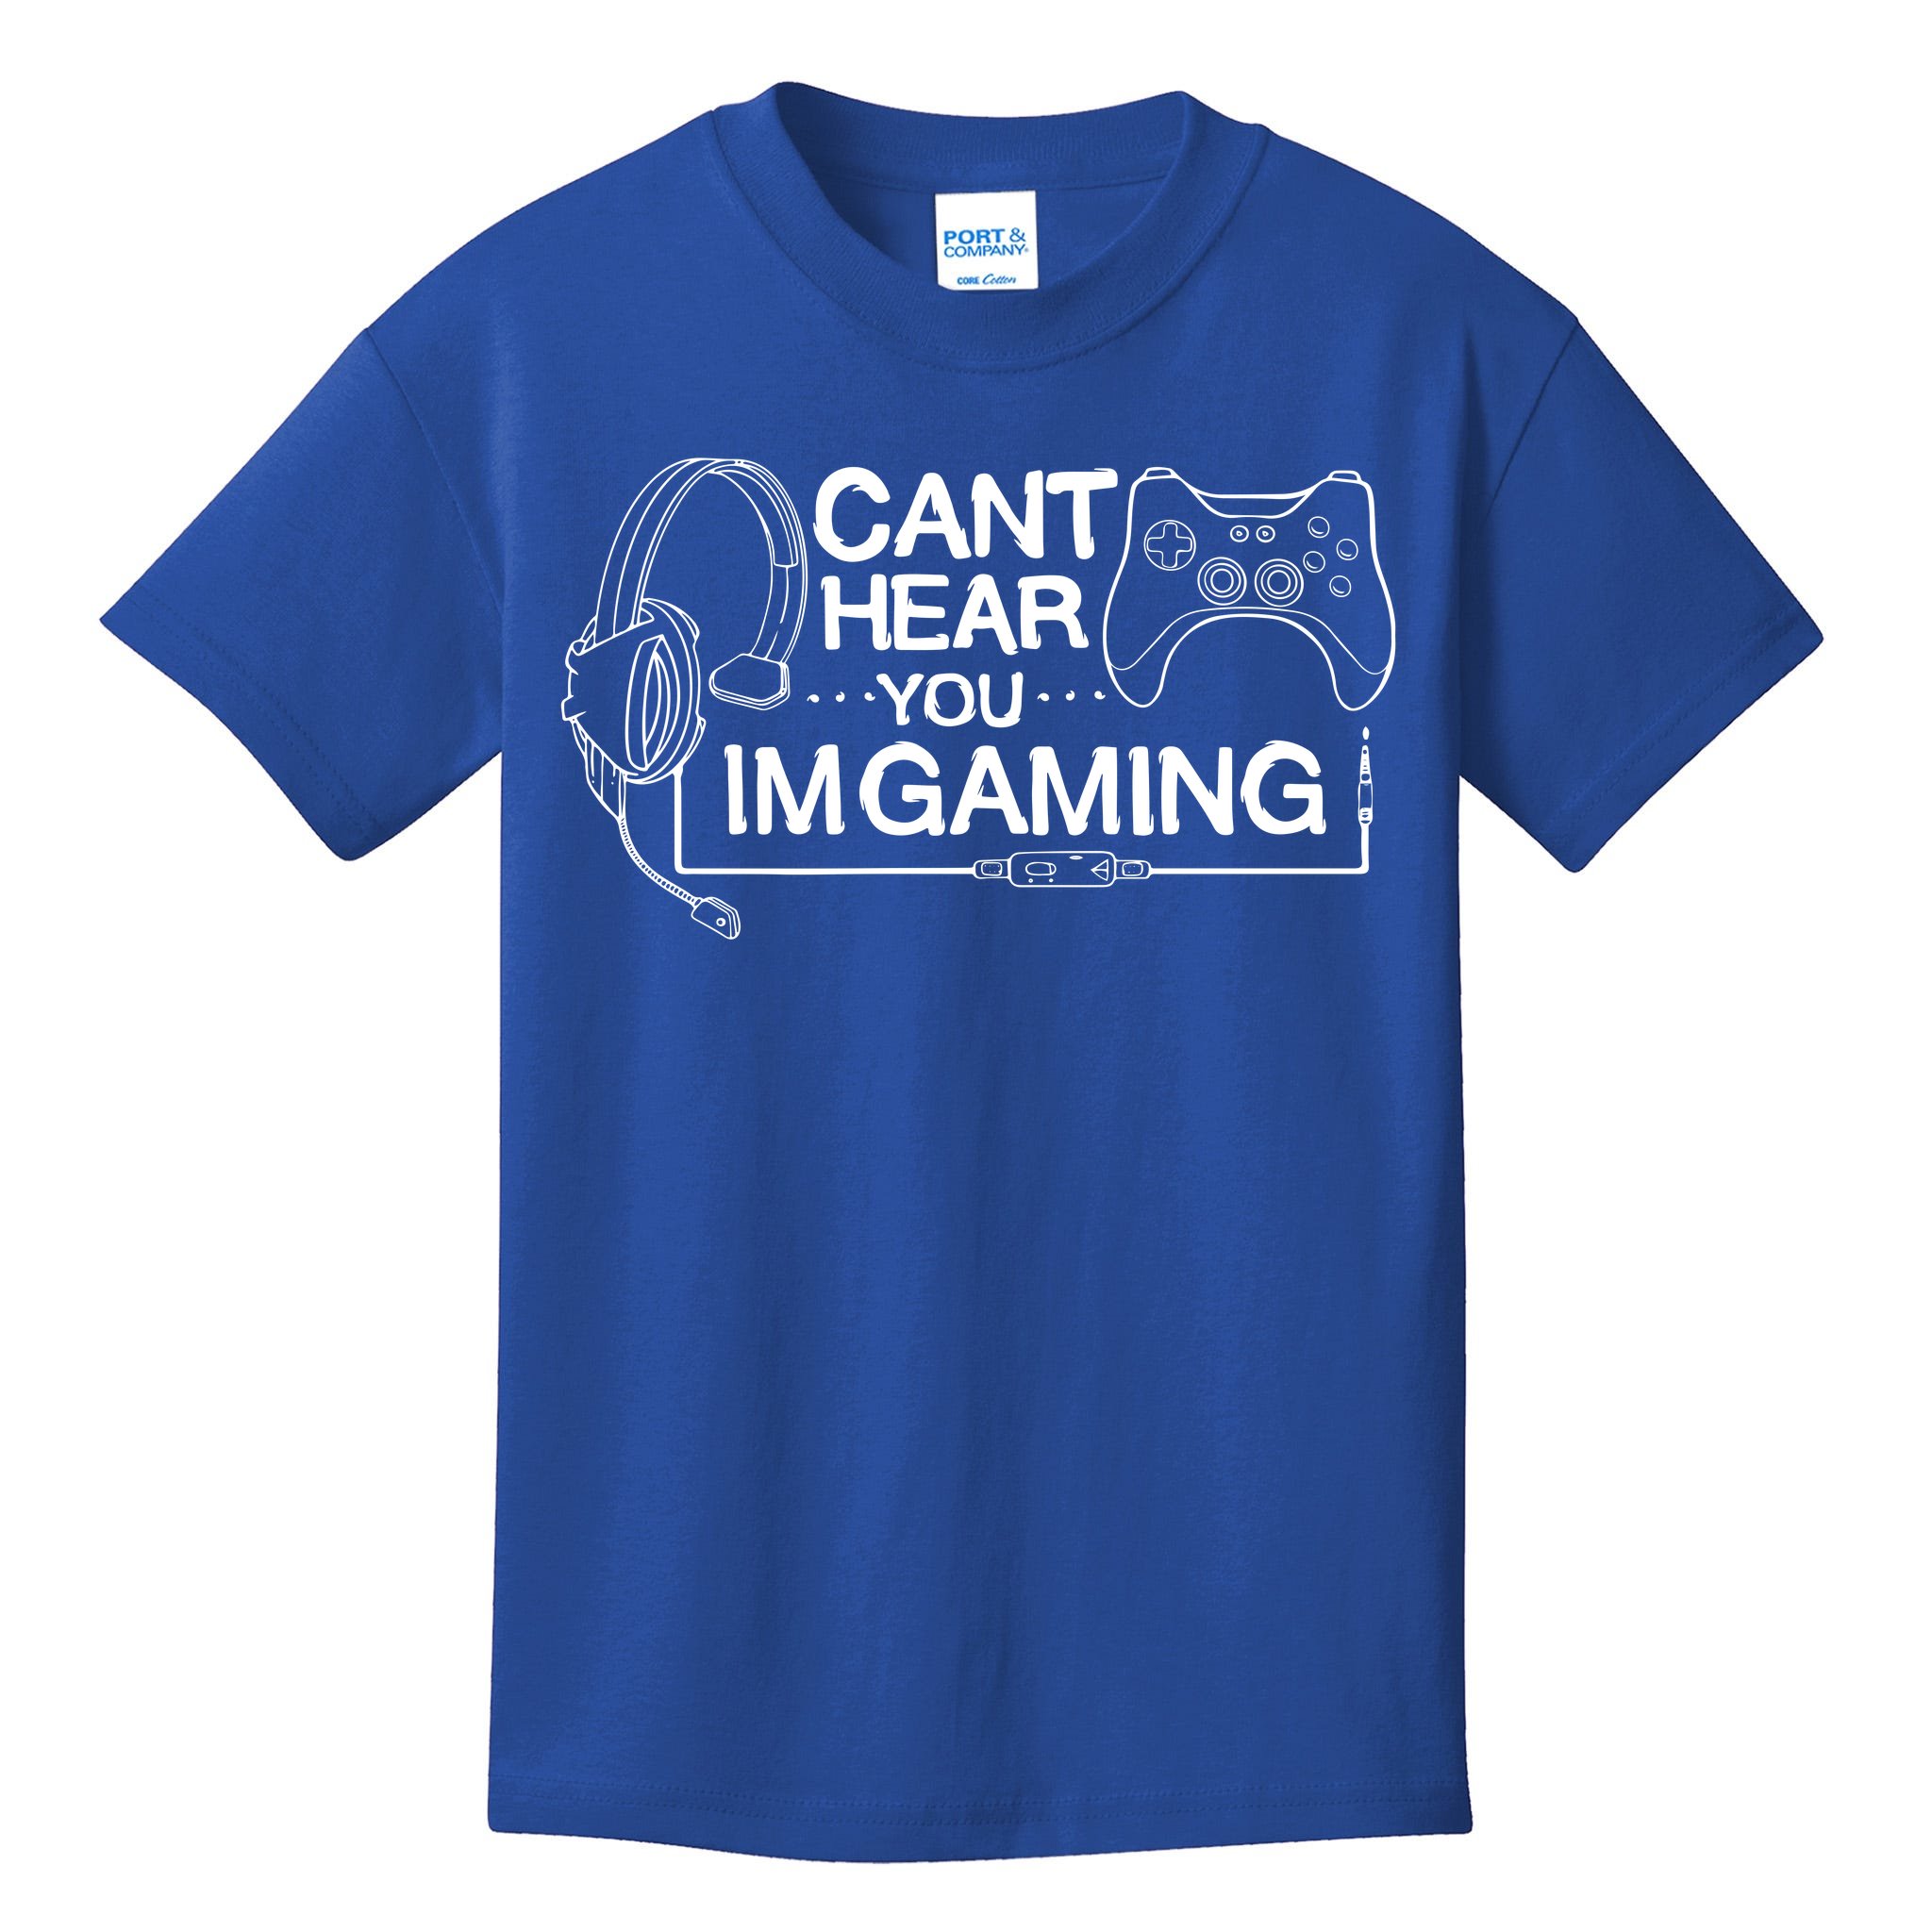 Kids Gaming Shirt I'm Gaming Shirt I Can't Hear You I'm Gaming Shirt Gamer Shirt Game All Day Video Game Shirt Video Game Party Shirt